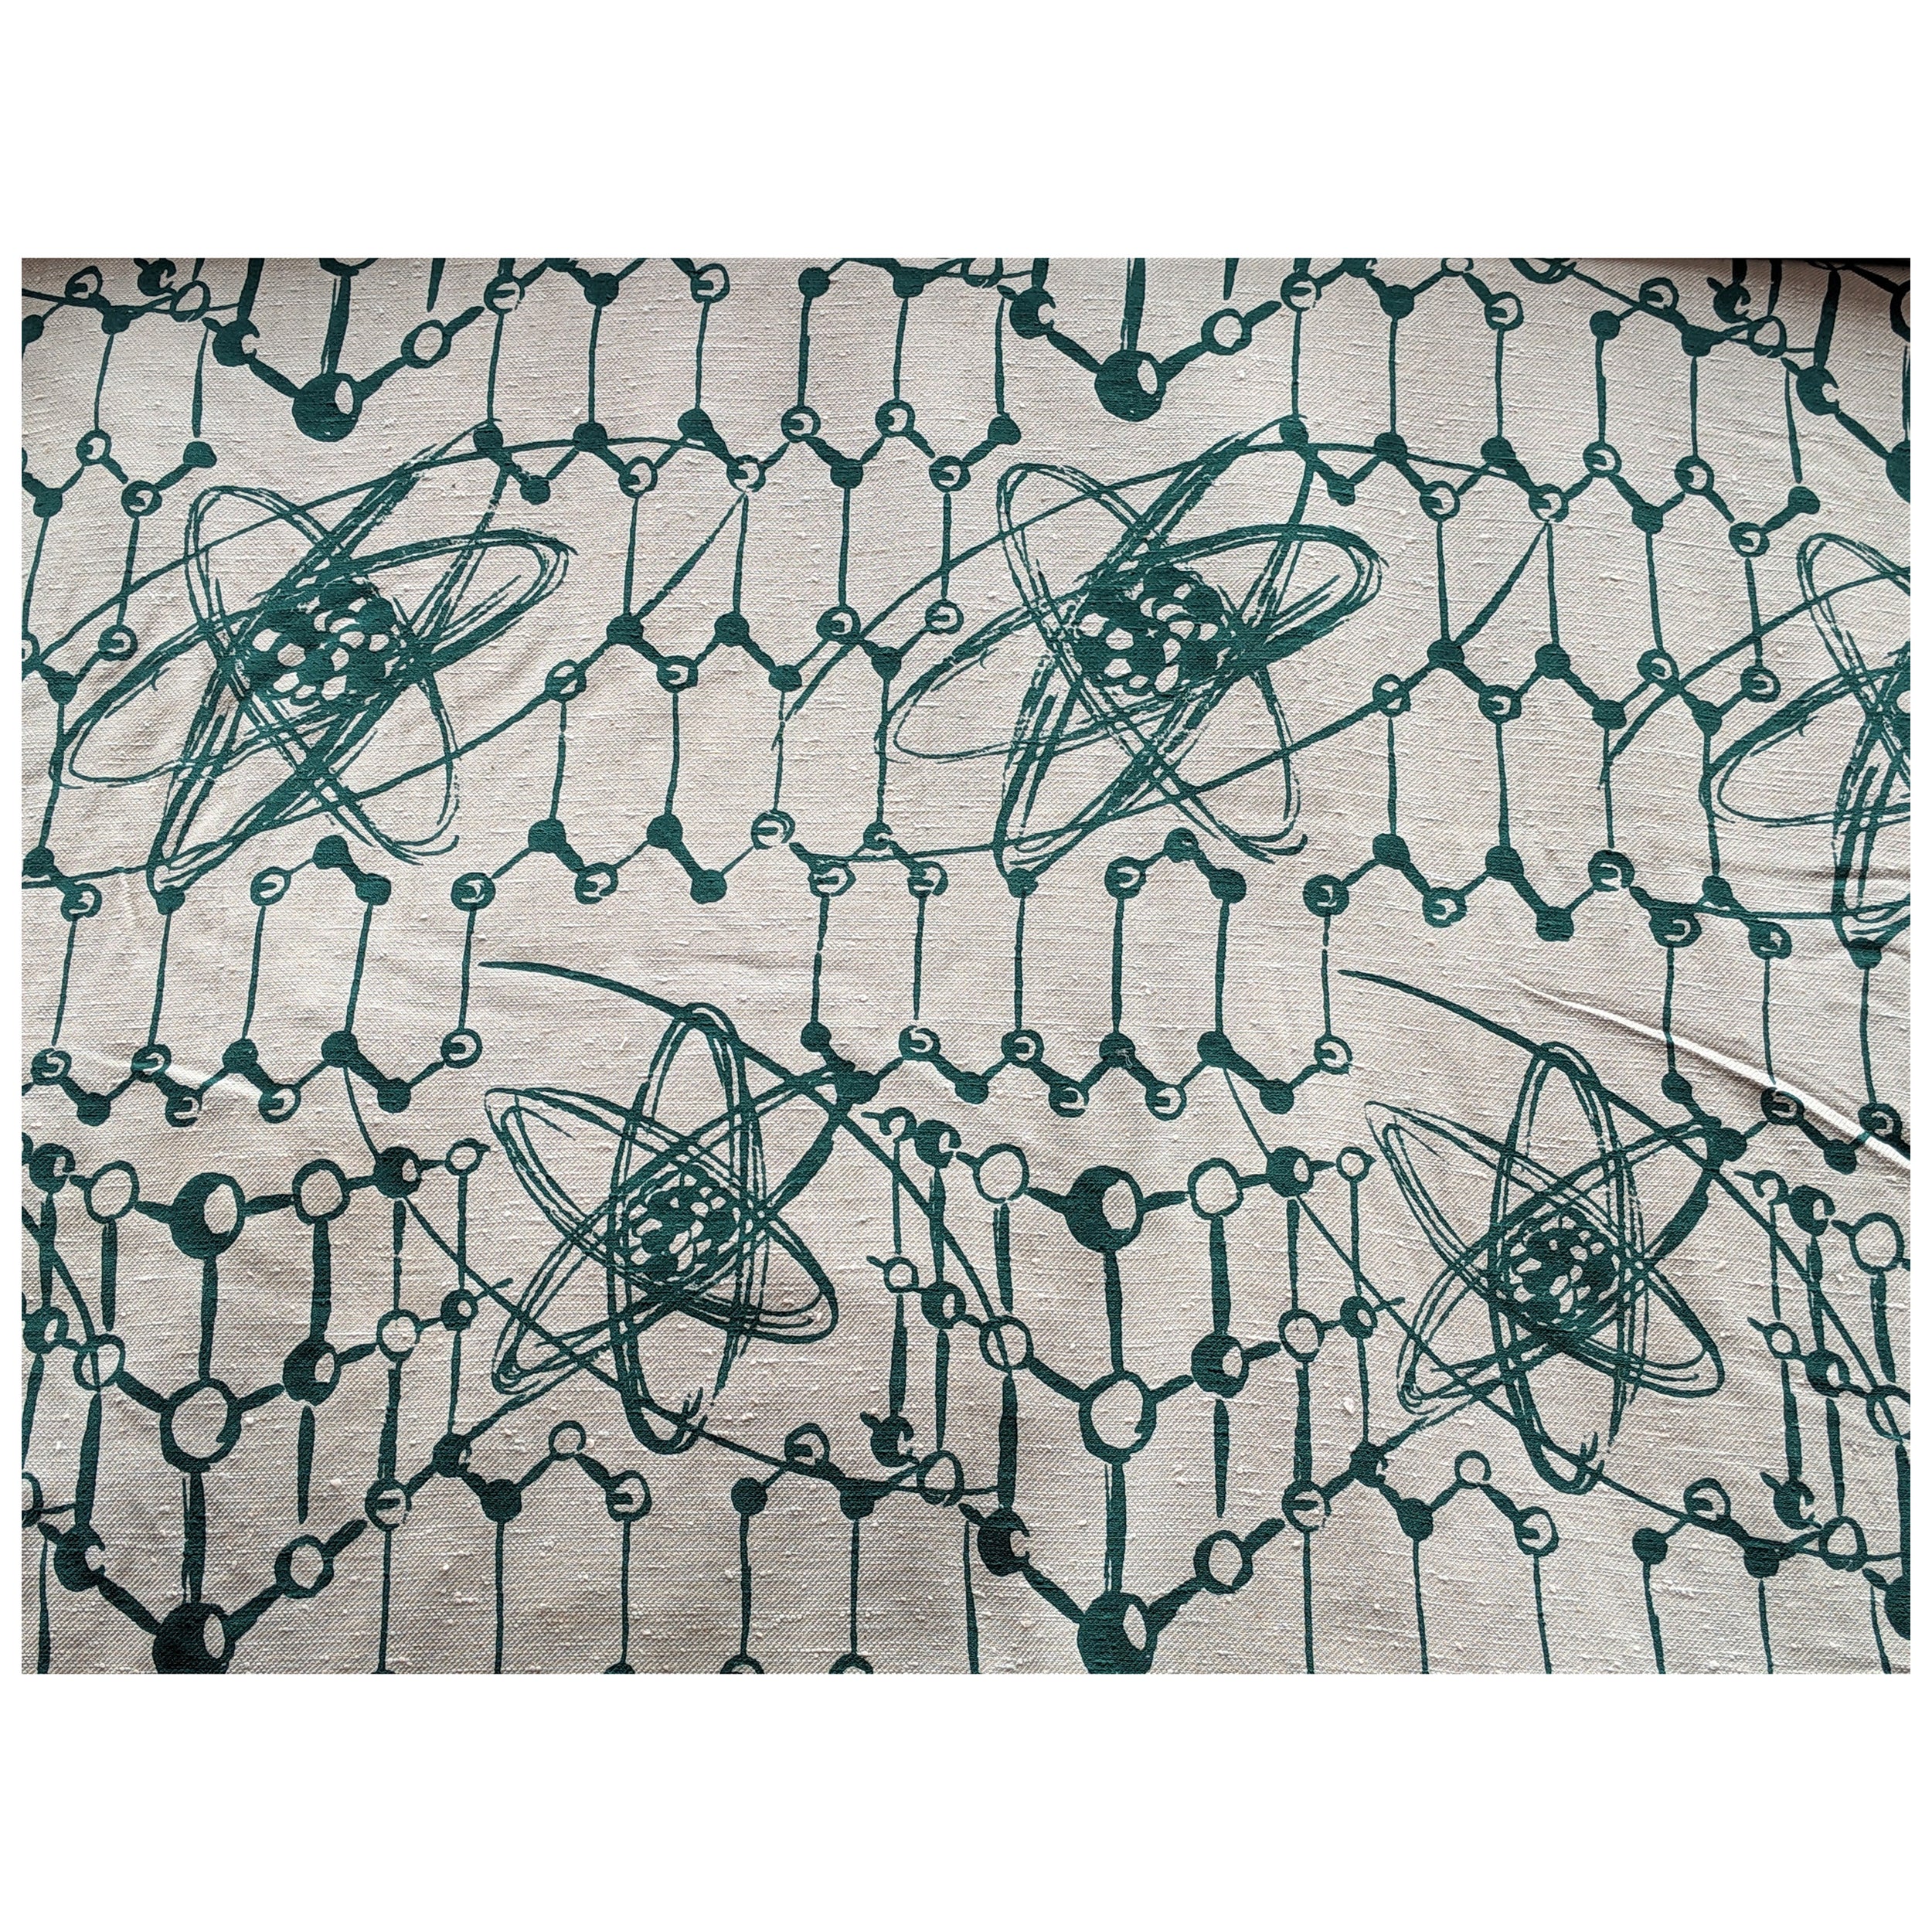 Scalamandre Silk Textile, "Atomic Energy", 1964 Worlds Fair